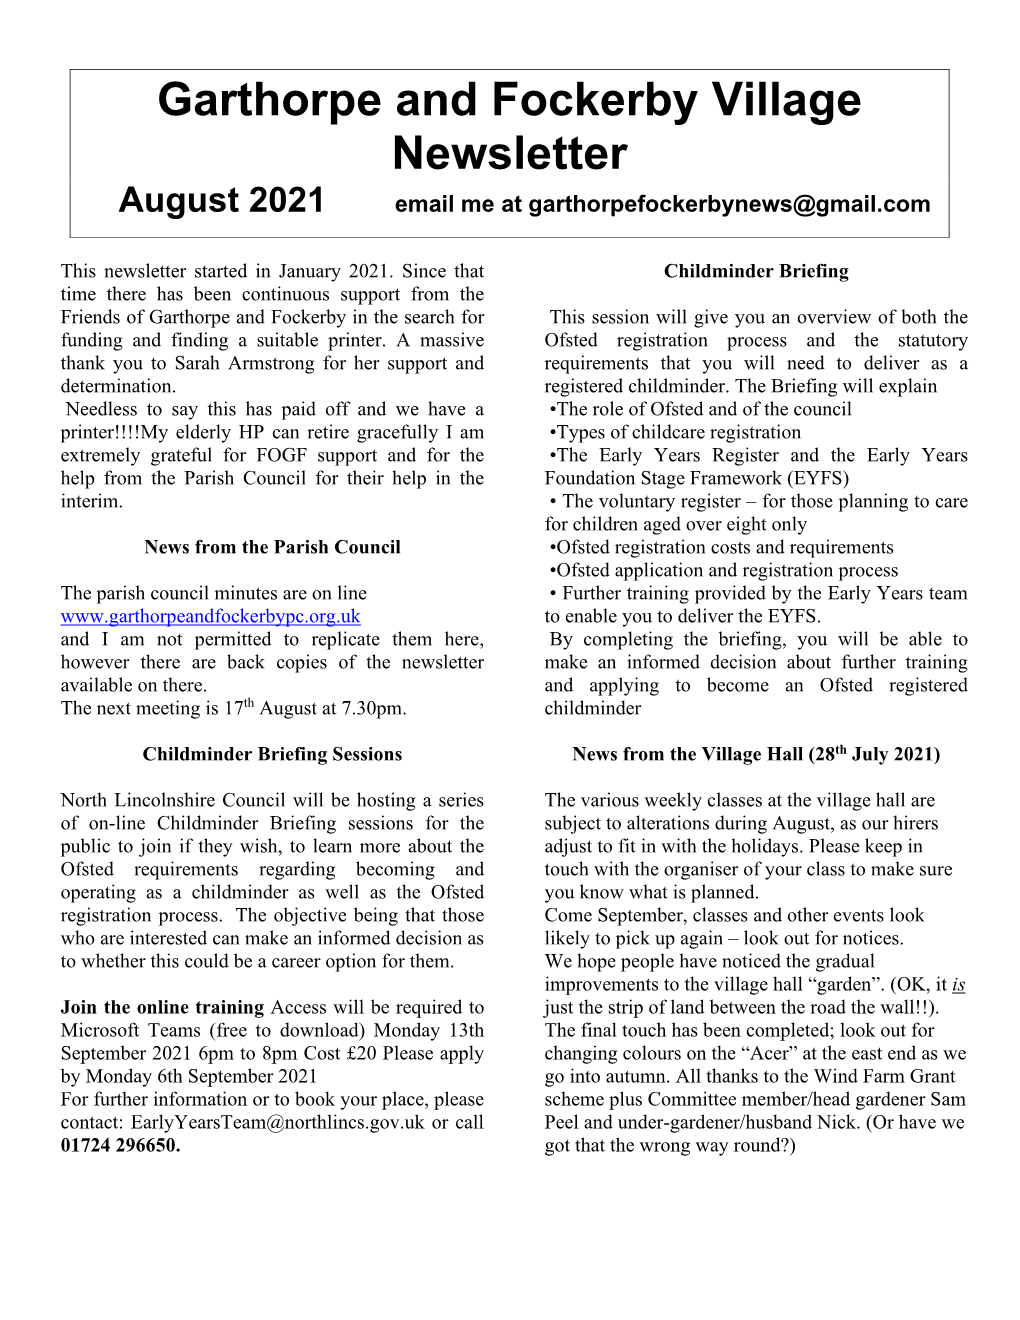 Garthorpe and Fockerby Village Newsletter August 2021 Email Me at Garthorpefockerbynews@Gmail.Com